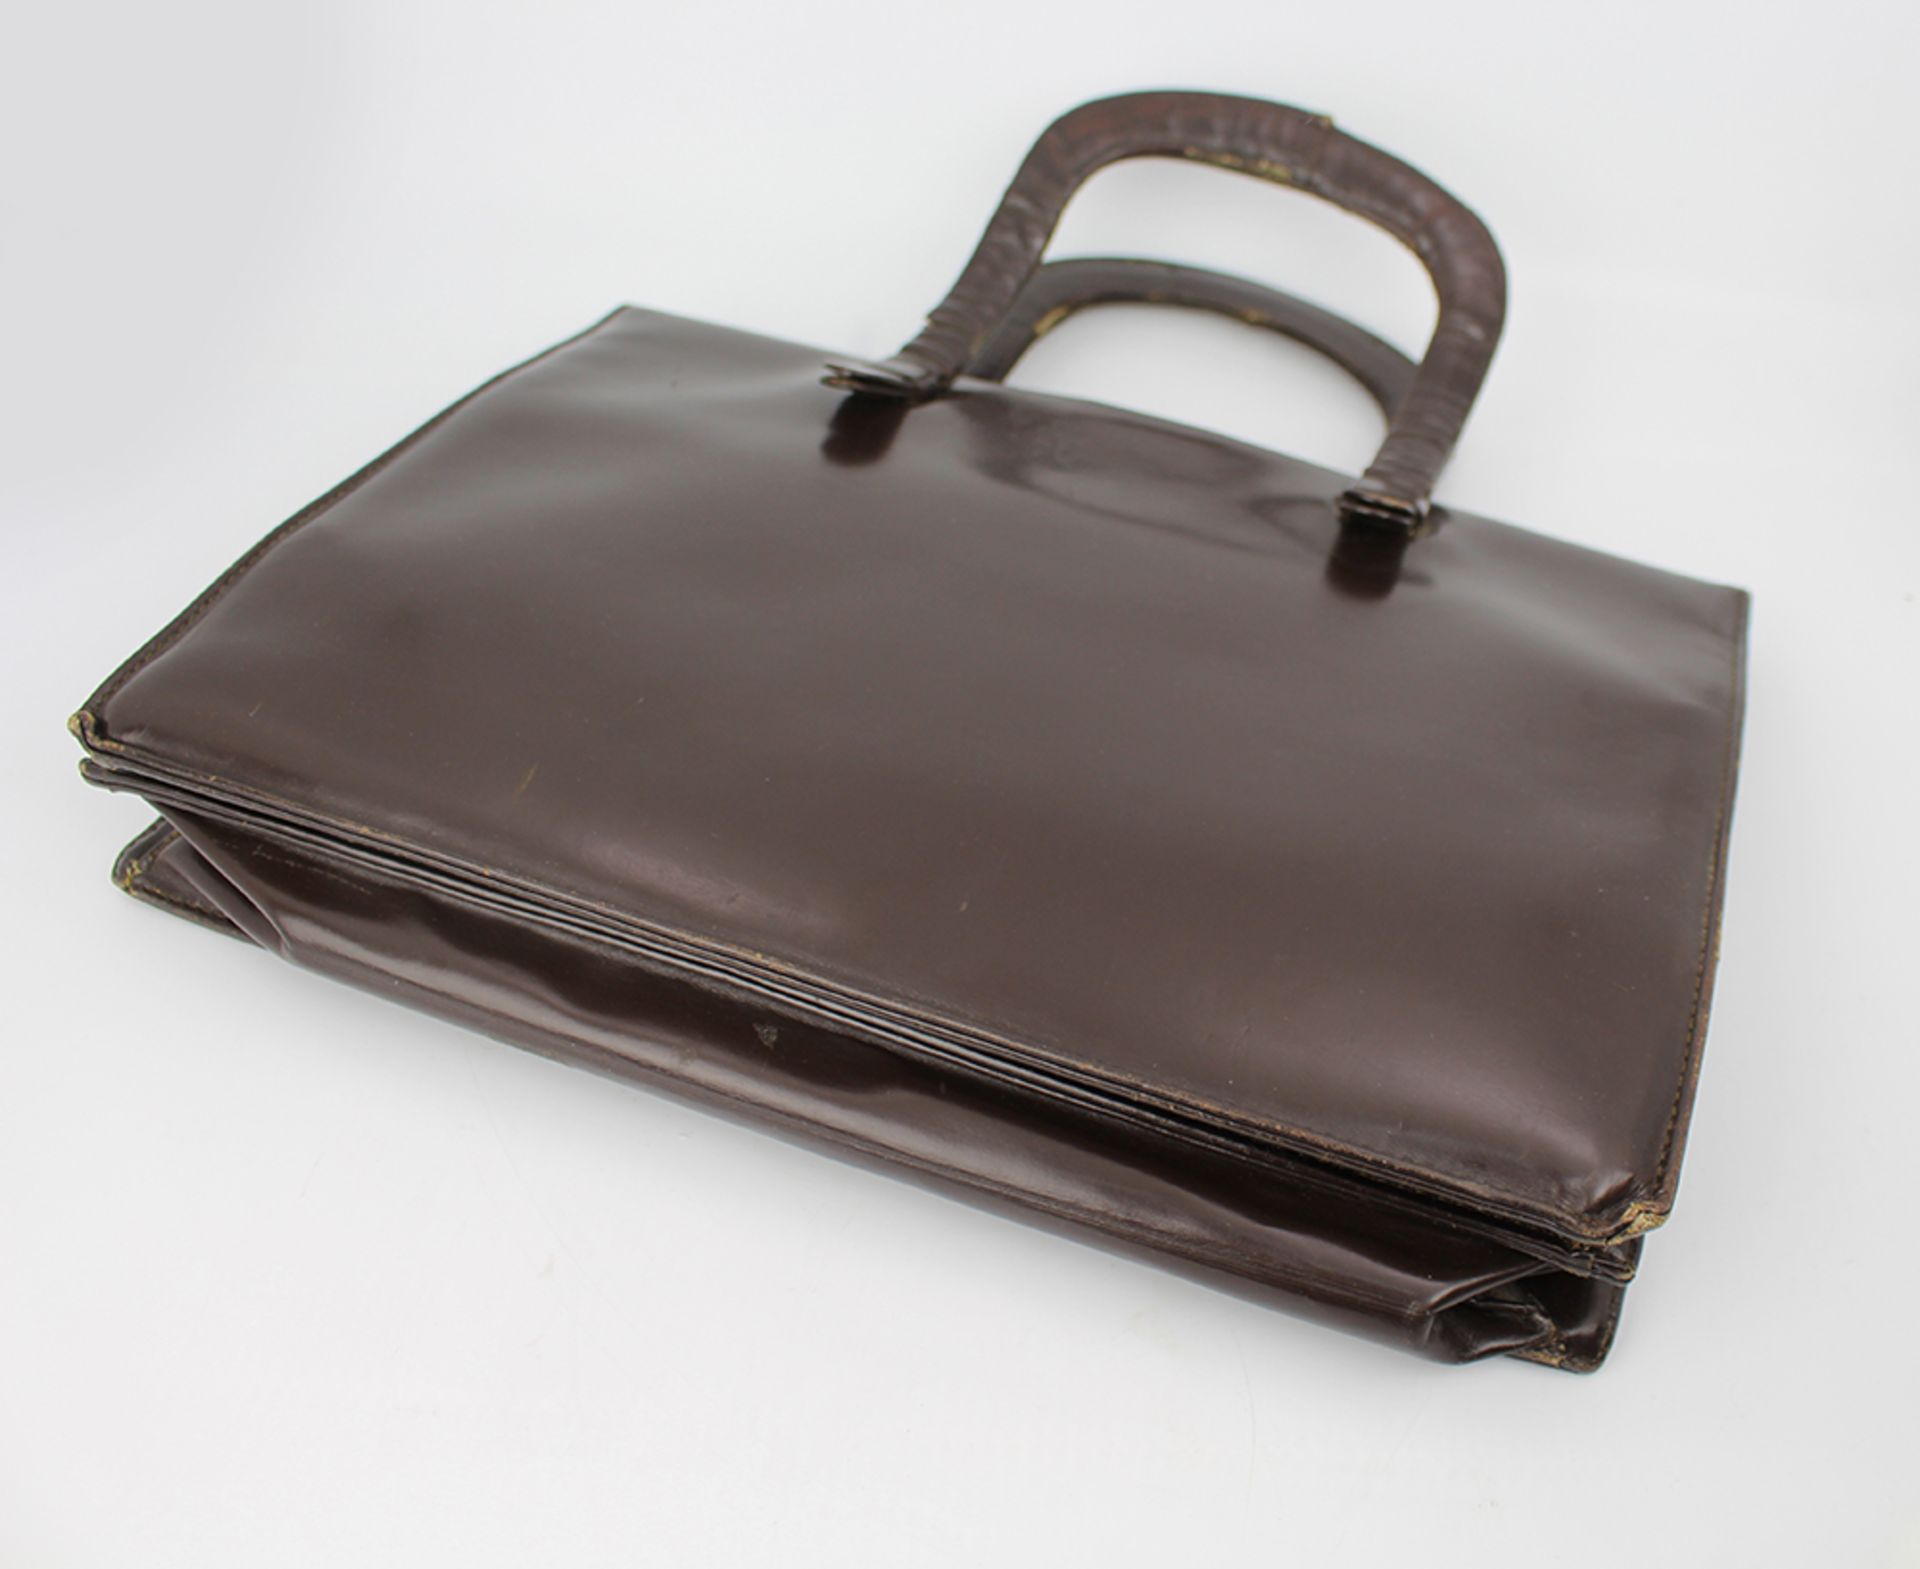 Vintage Patent Leather Handbag - Image 2 of 4